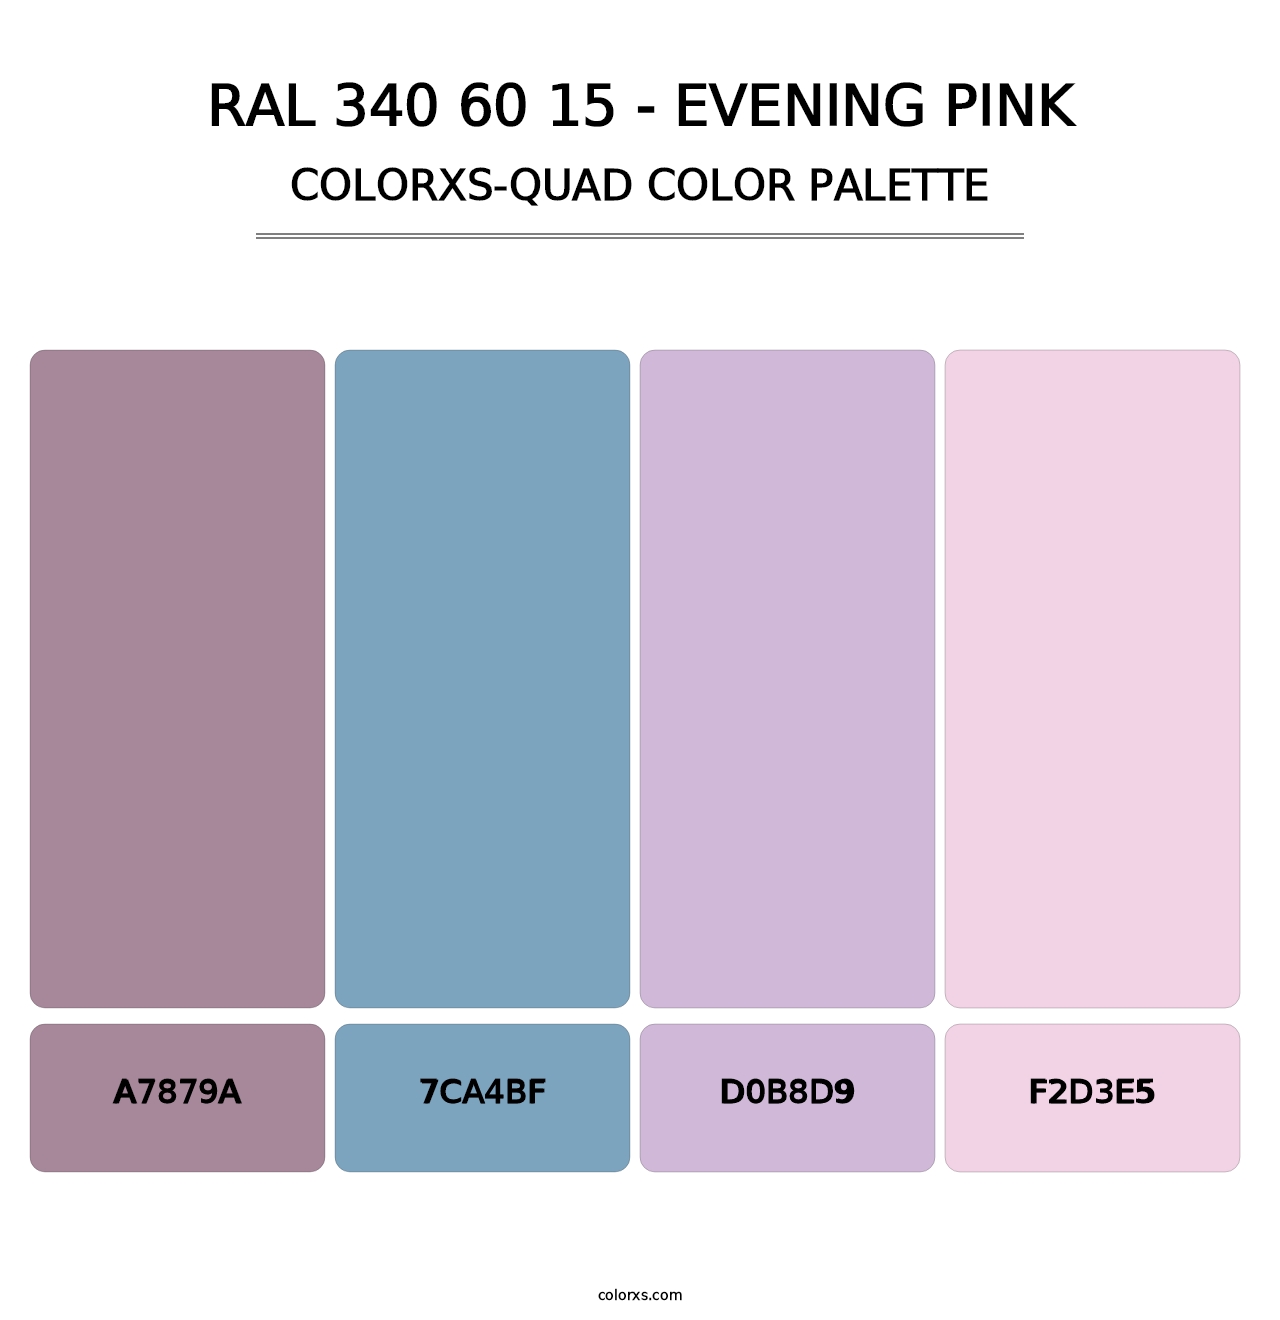 RAL 340 60 15 - Evening Pink - Colorxs Quad Palette